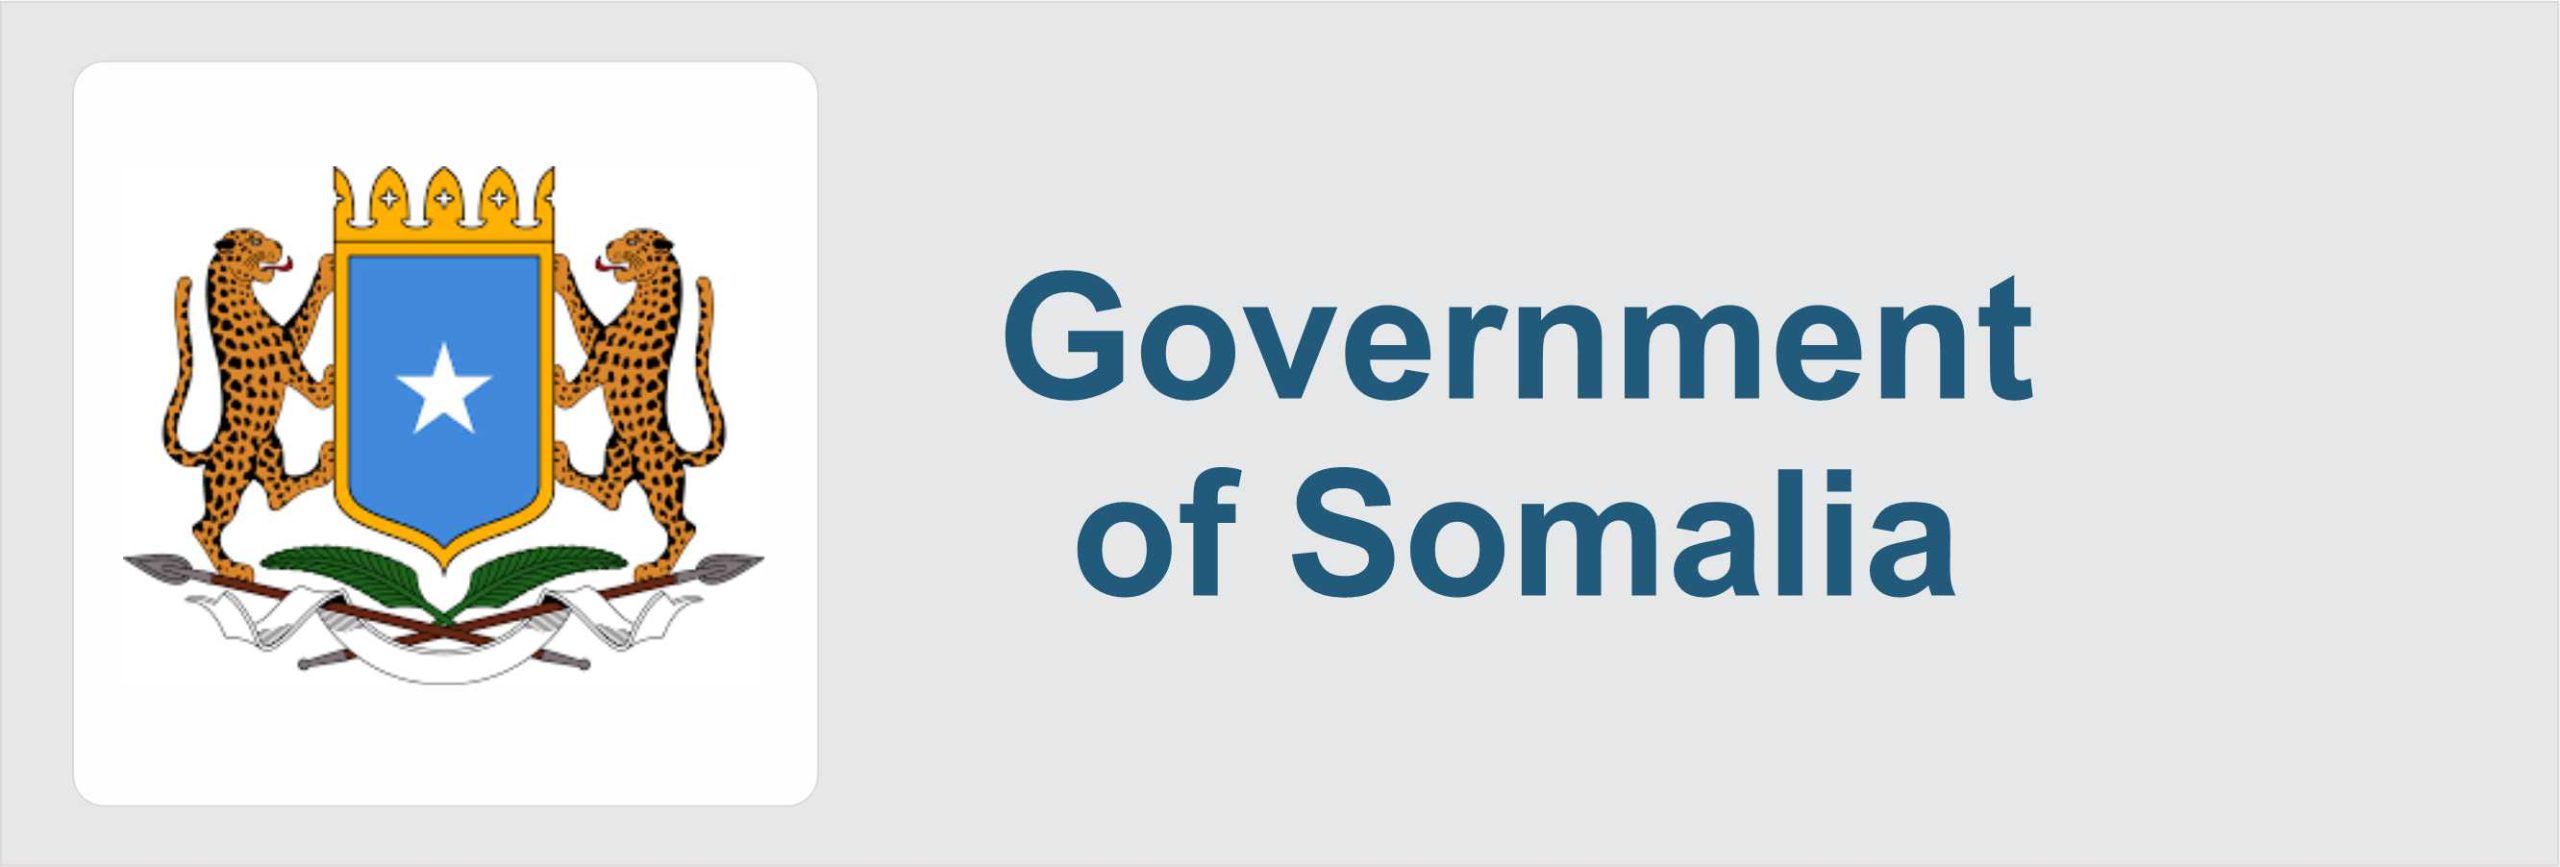 Government of Somalia